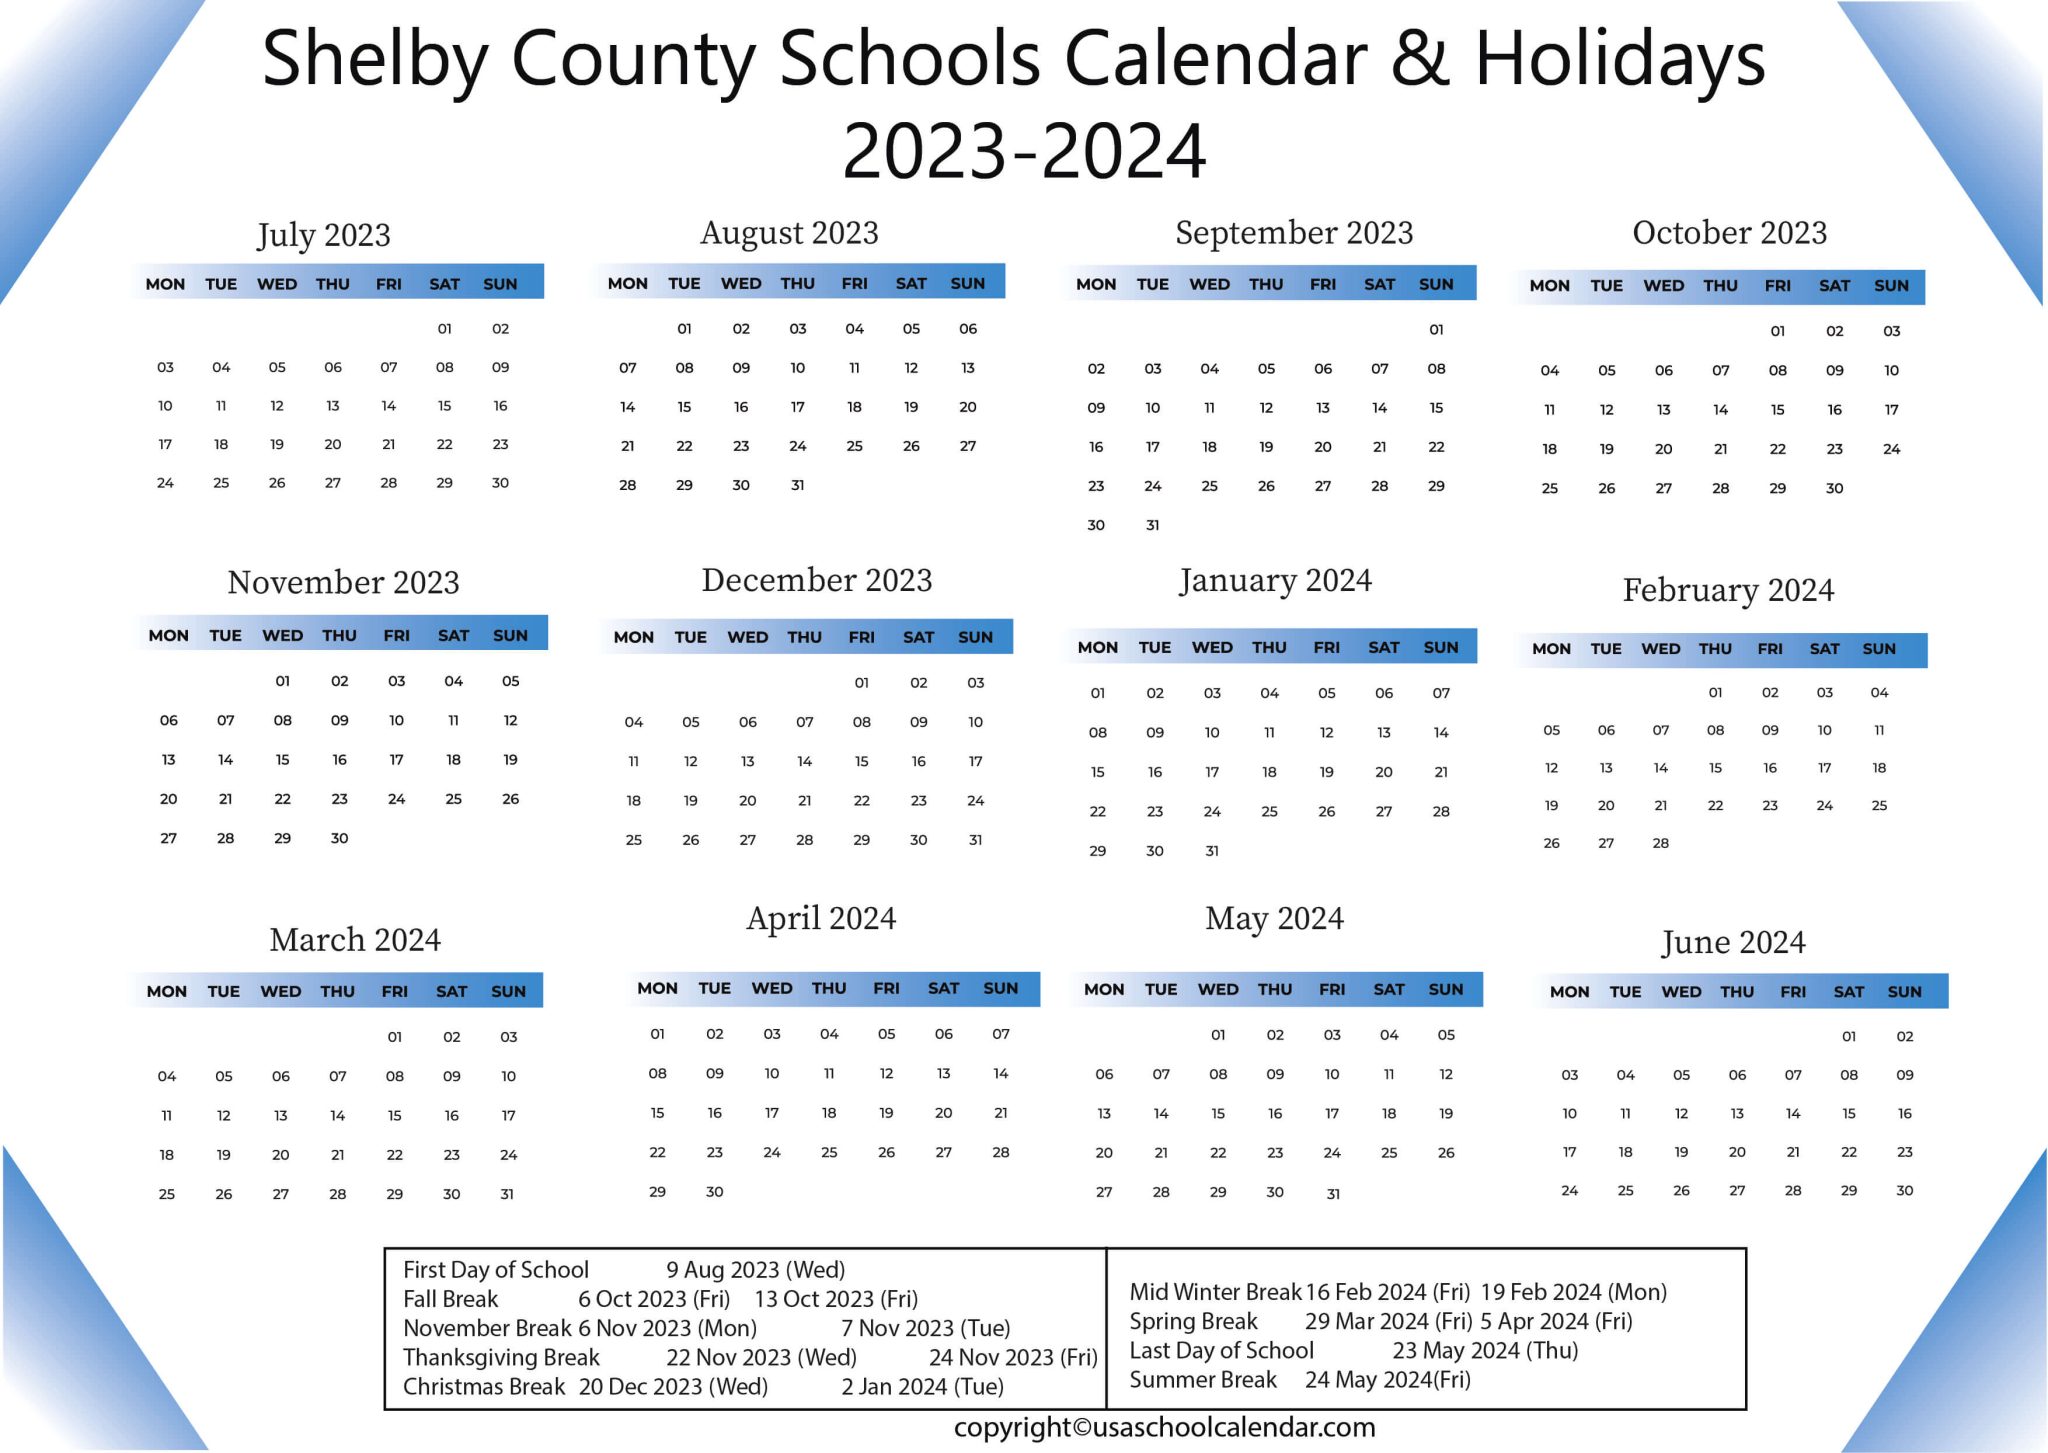 shelby-county-schools-calendar-holidays-2023-2024